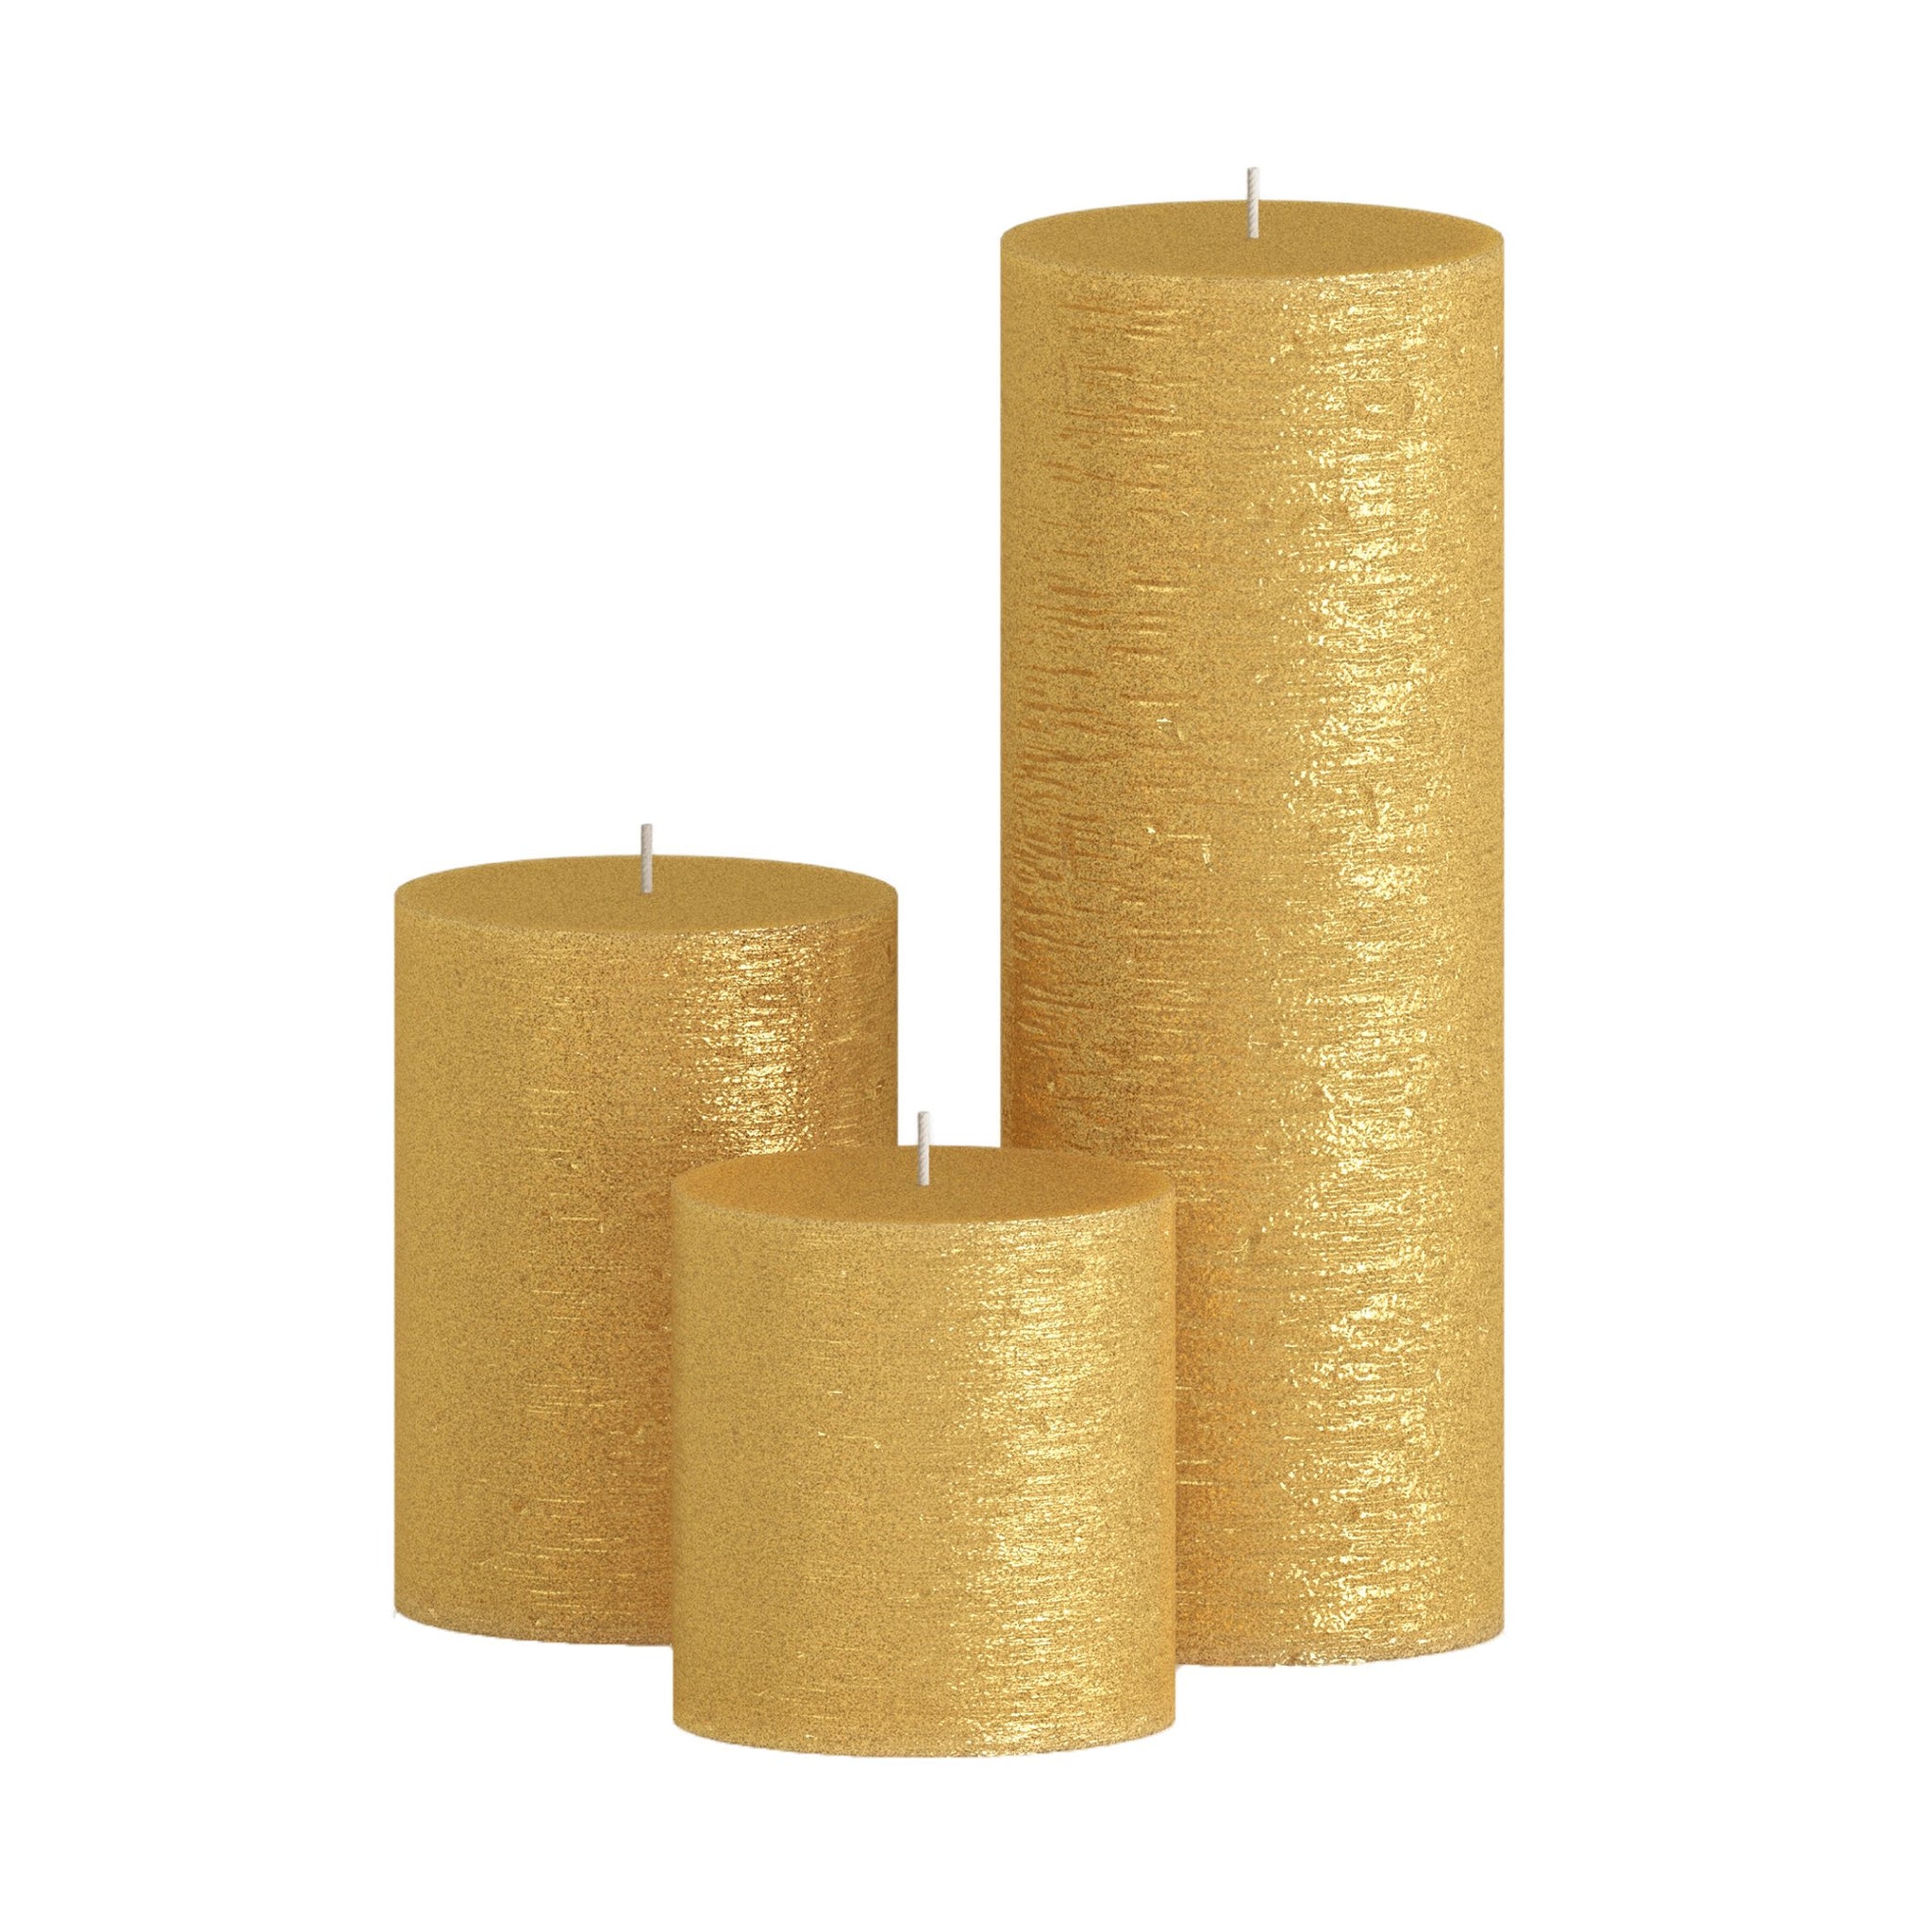 CANDWAX Gold Pillar Mix - 3 inch, 4 inch & 8 inch